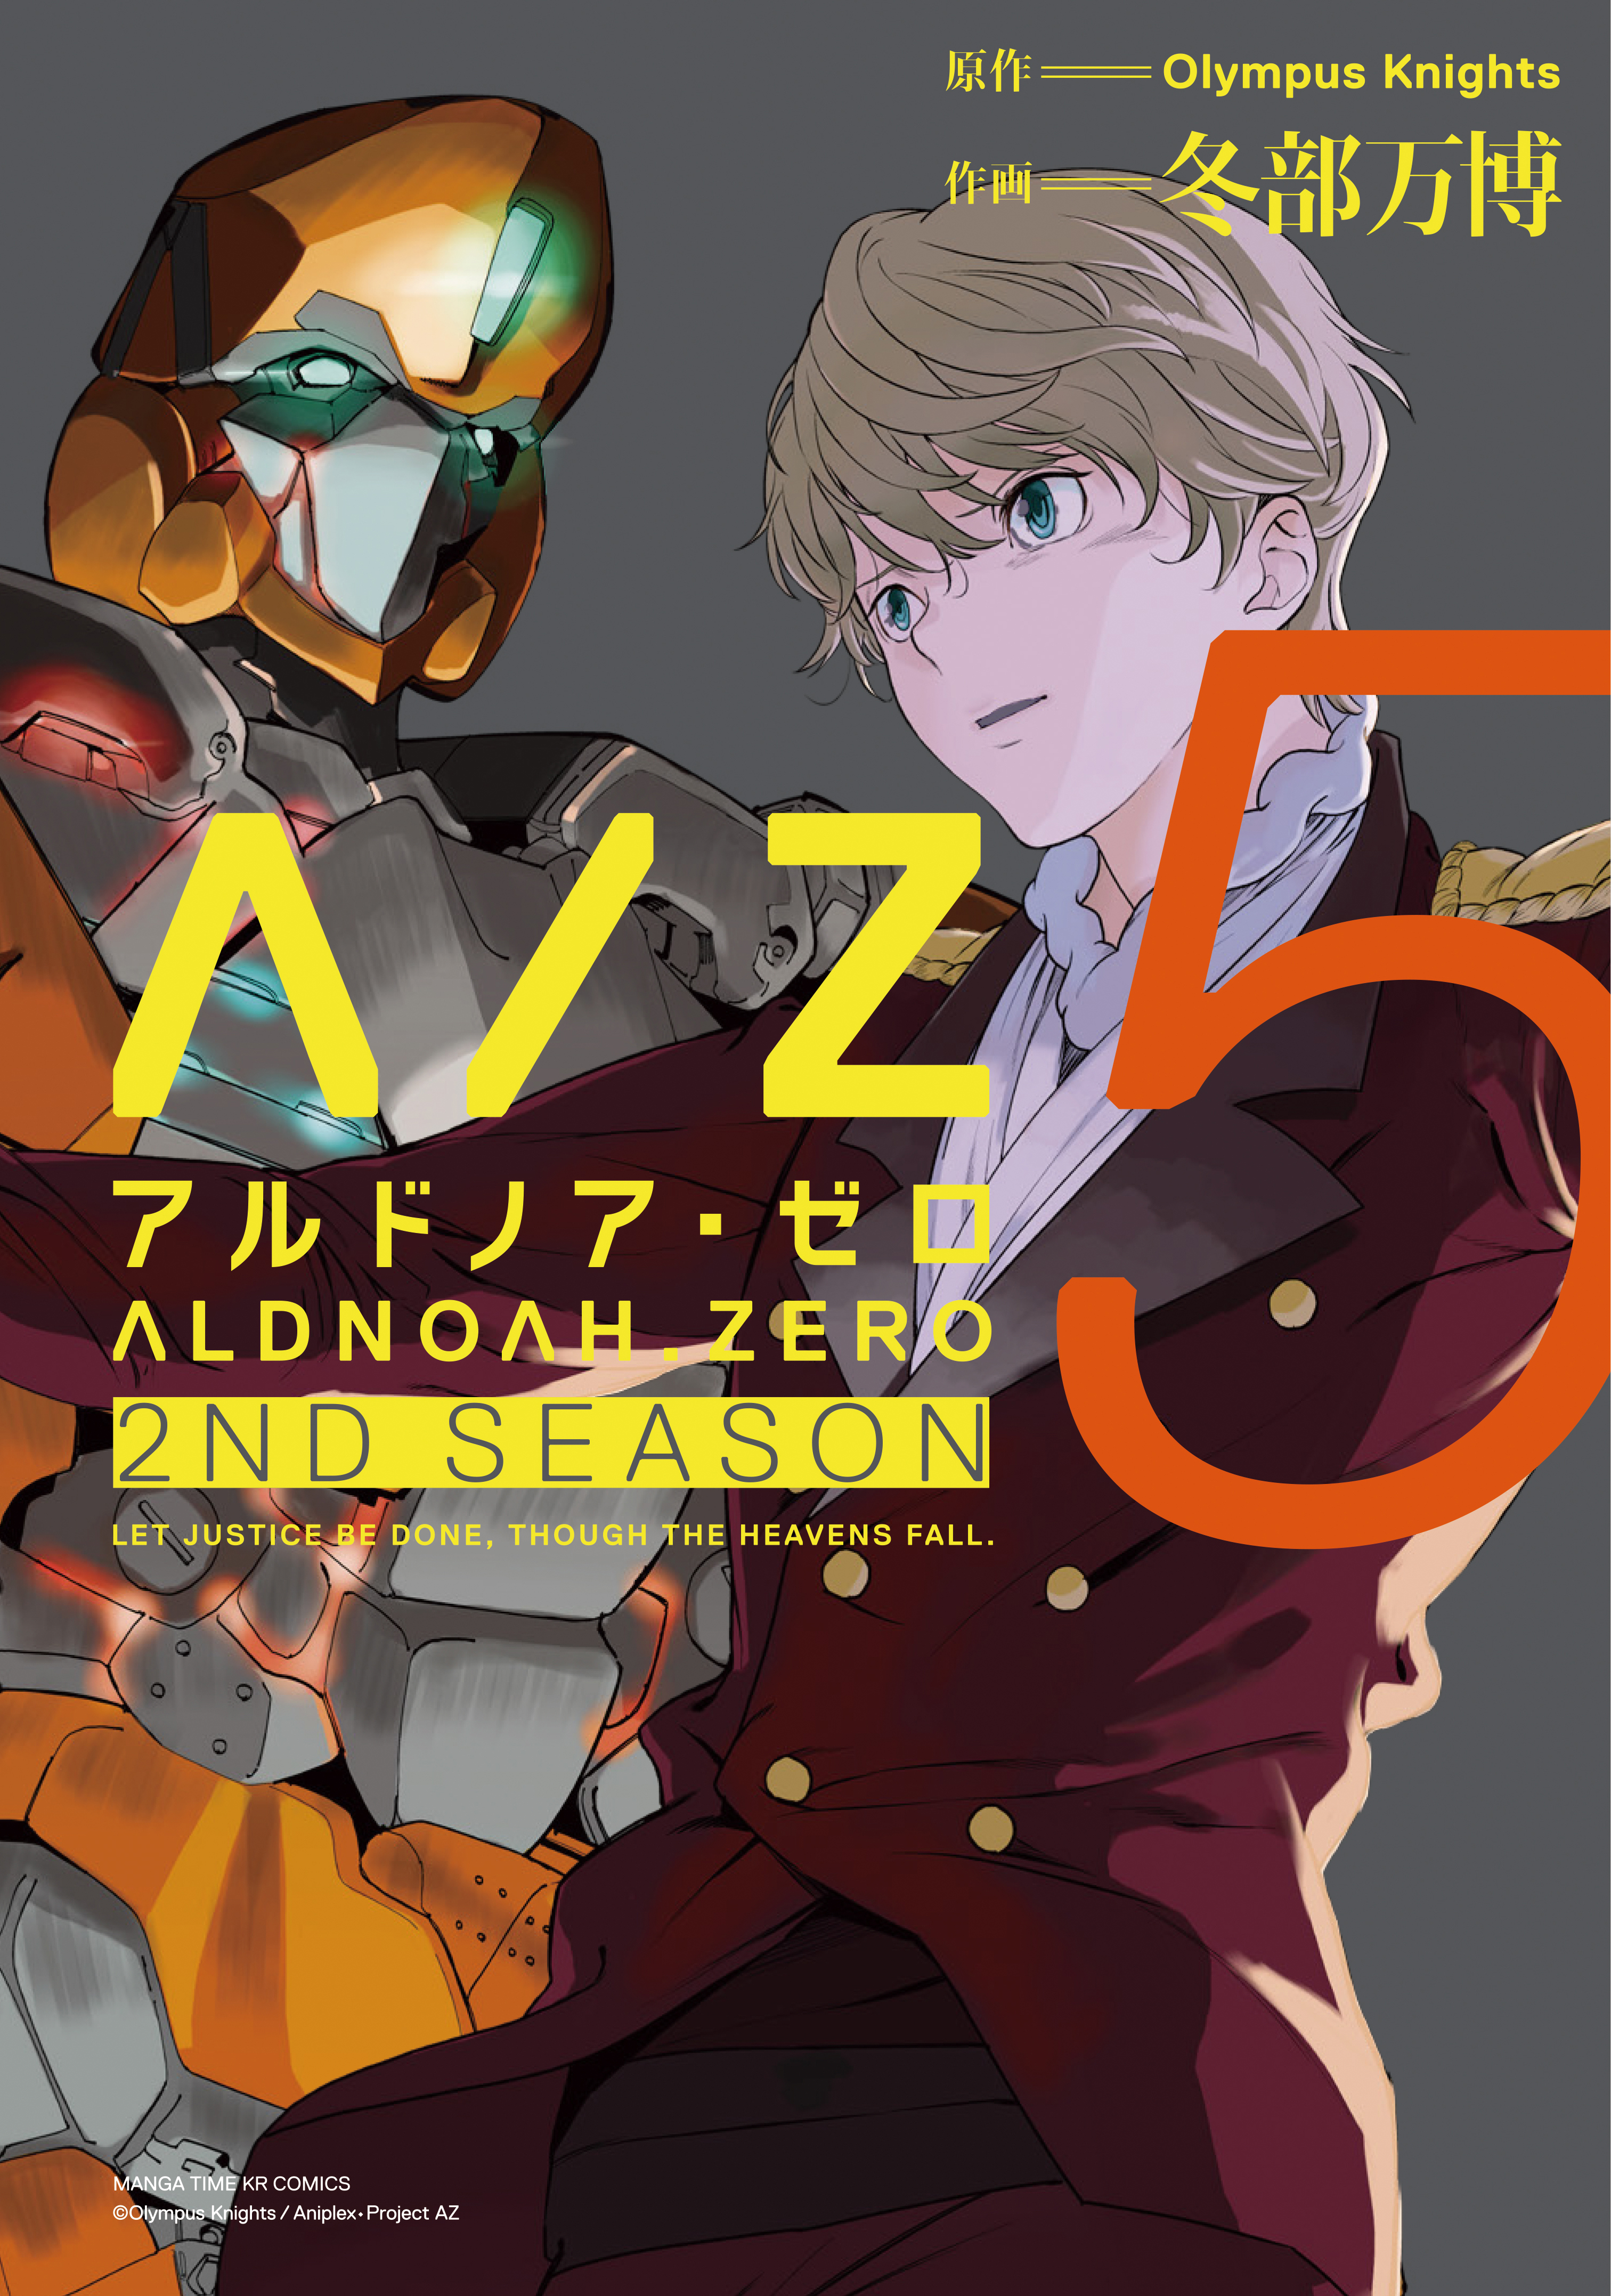 Aldnoah Zero Season 2 Episode 12 NTR Edition アルドノア・ゼロ Anime Finale Review -  The Ultimate Slap 